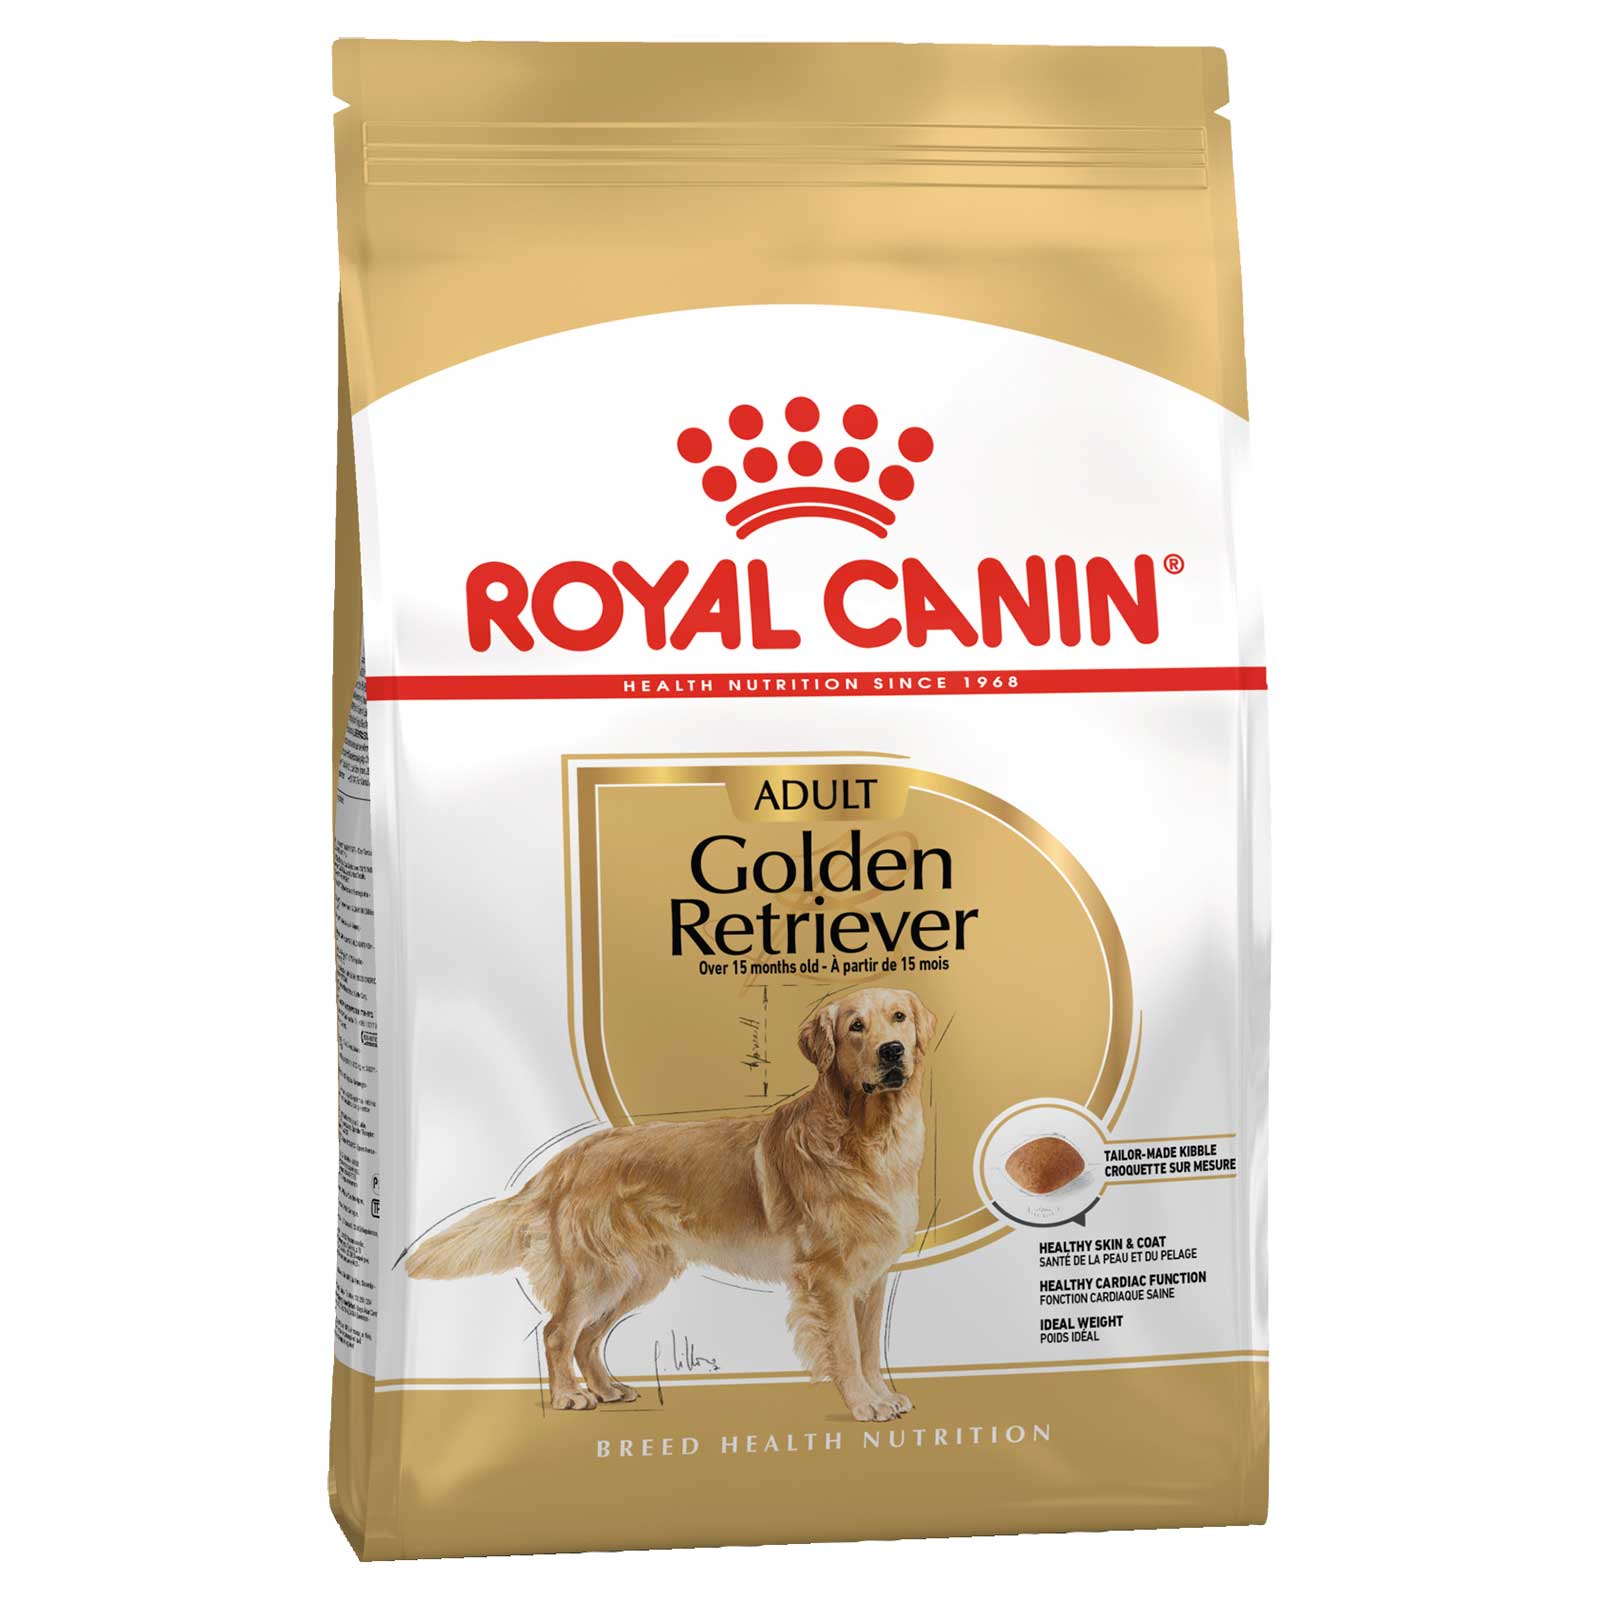 Royal Canin Dog Food Adult Golden Retriever